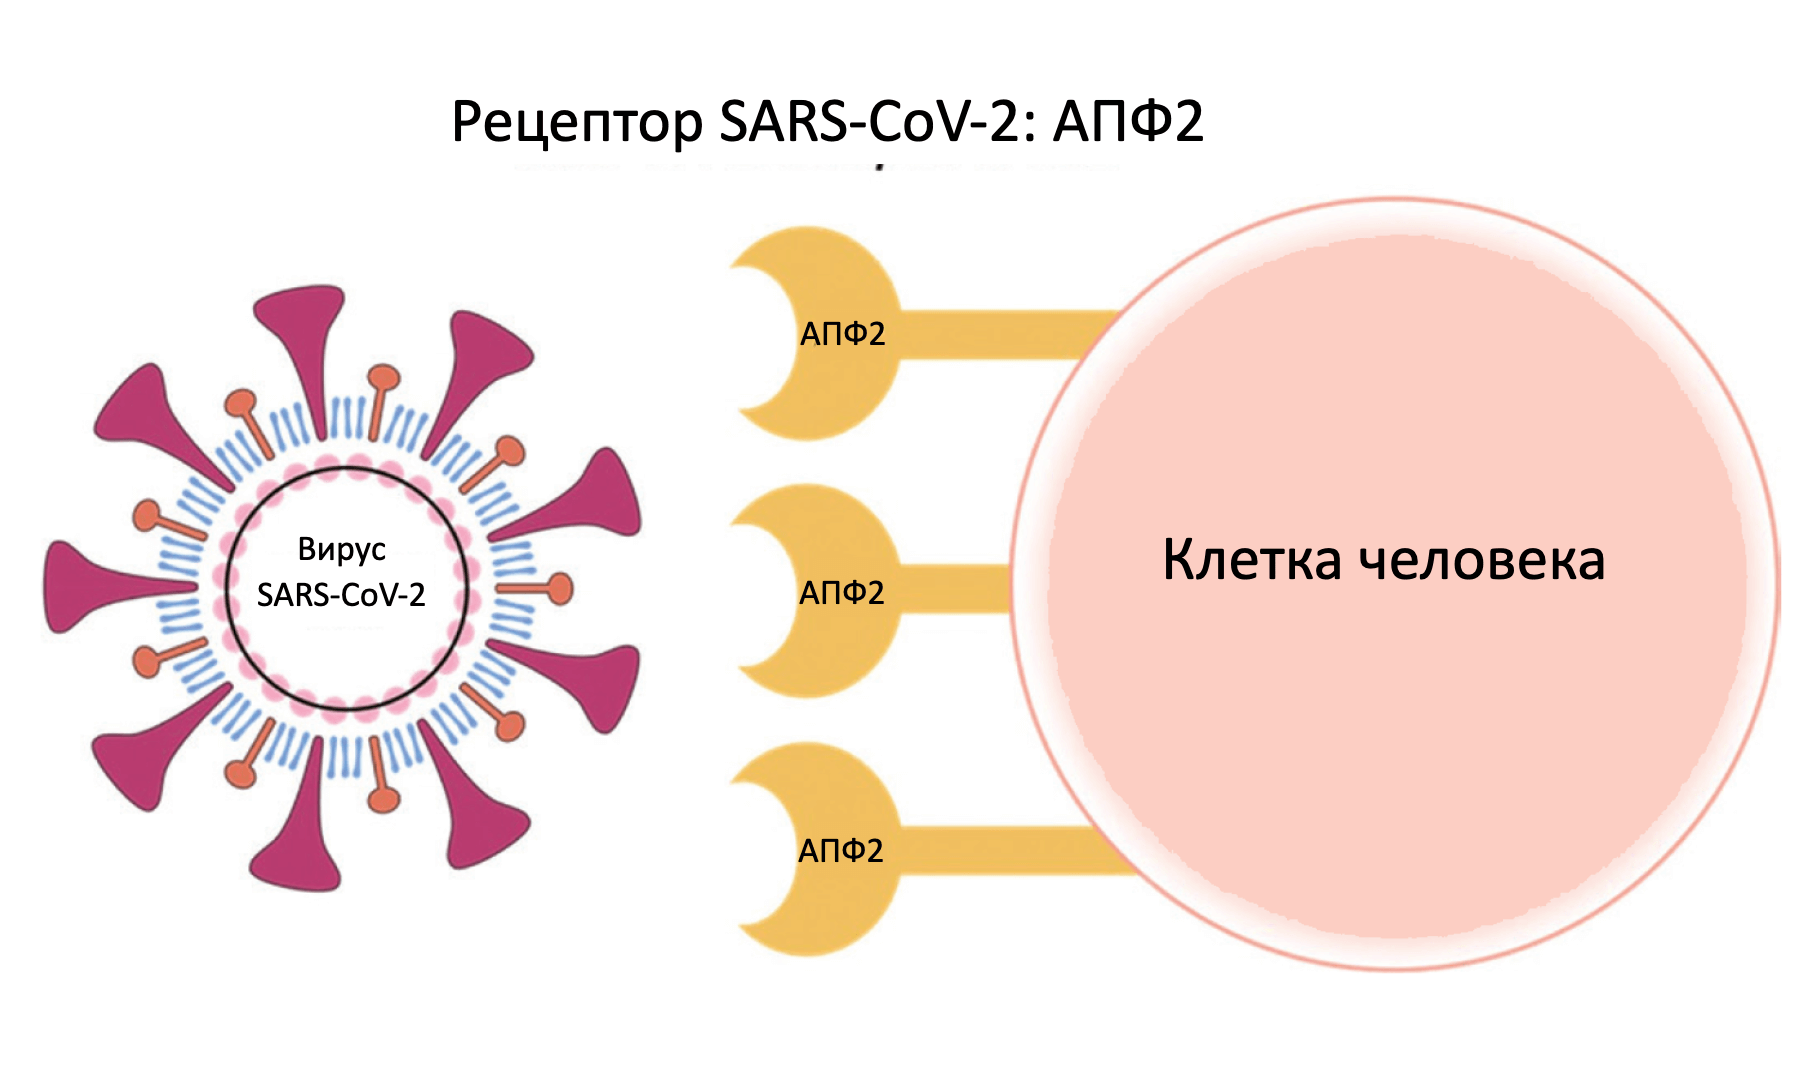 рецепторы SARS-COV-2